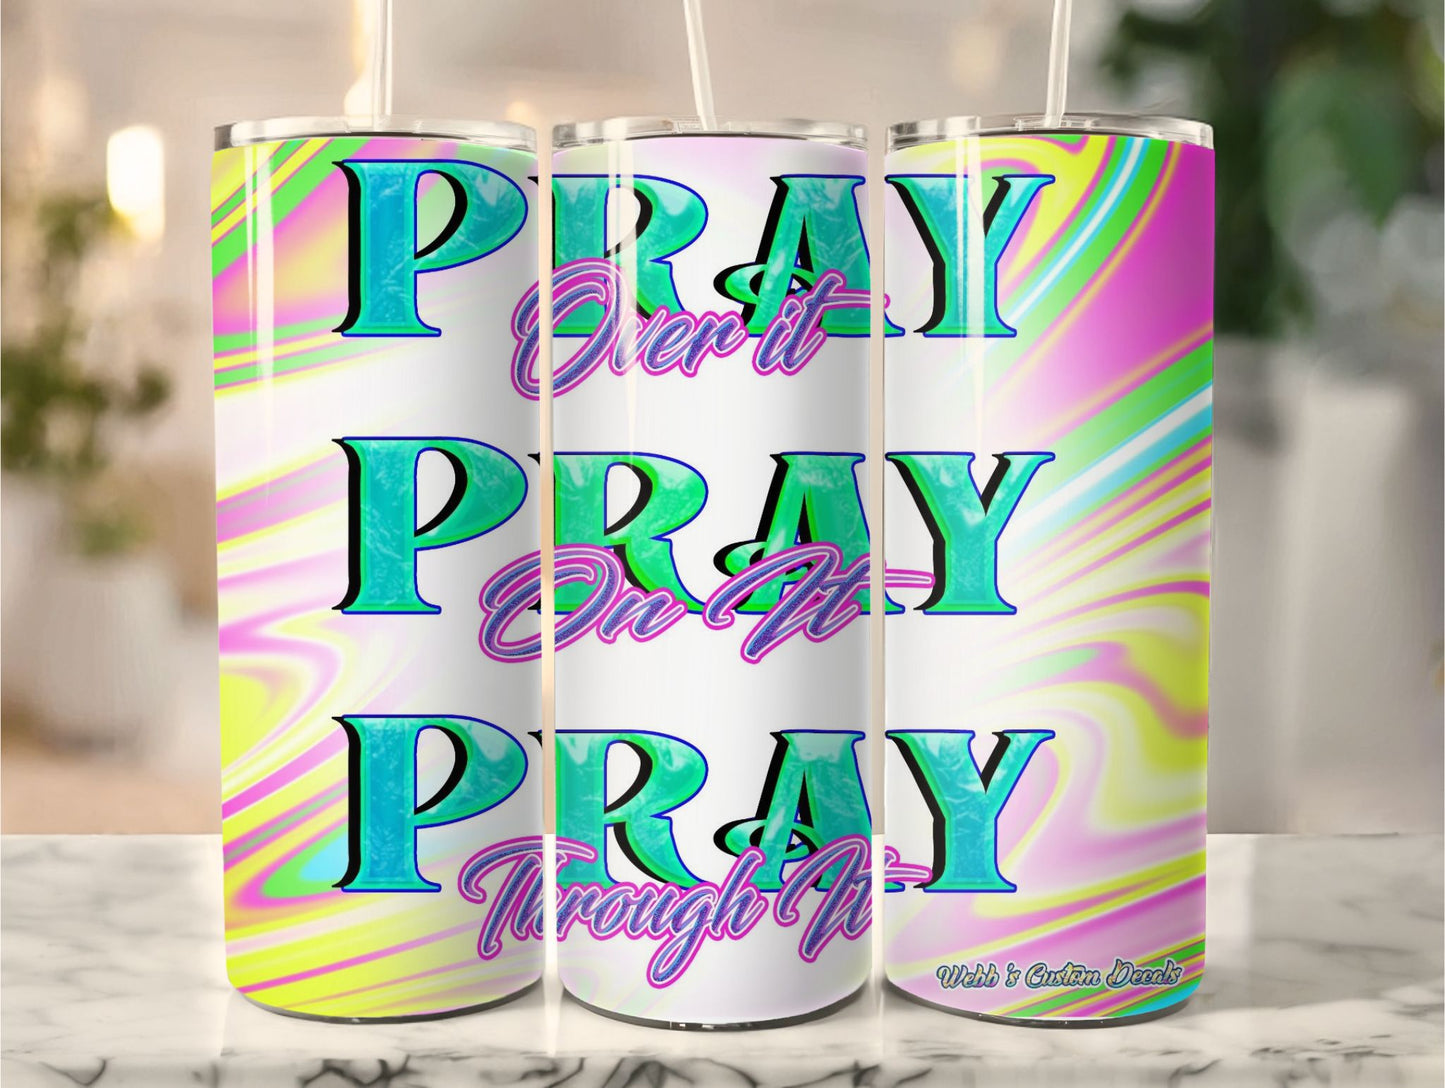 Spring Refresh Tumbler Bright Color Design  Pray Over It, Pray On It, Pray Through It  Order Now!